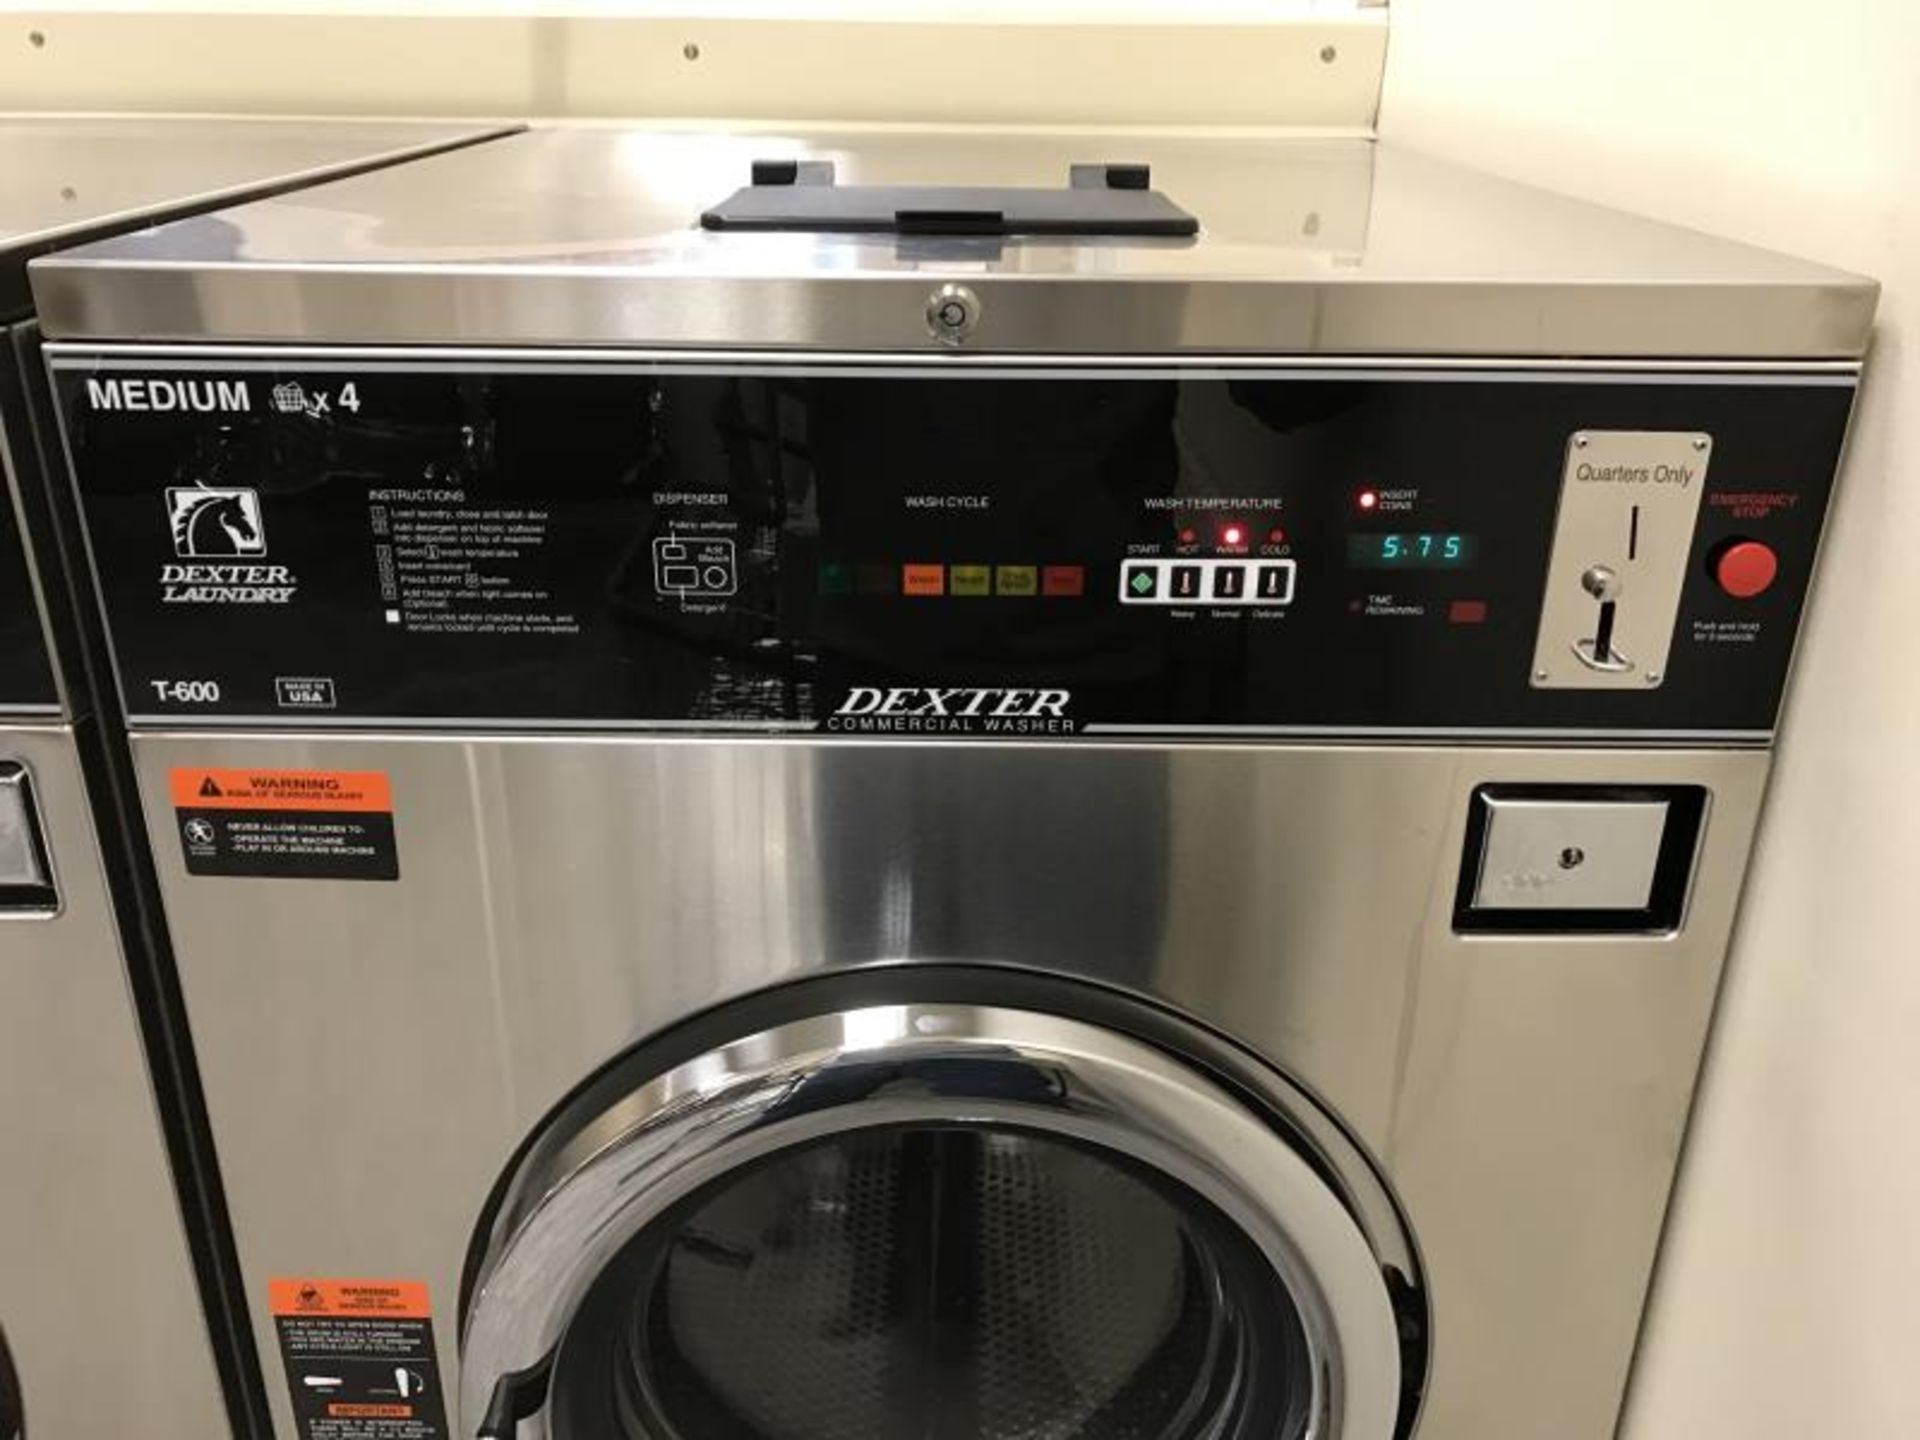 Dexter Commercial Washing Machine, Medium x 4, 40 Lbs., Model: T-600 / WCAD40KCX-12CN, SN: 531835 - Image 2 of 5